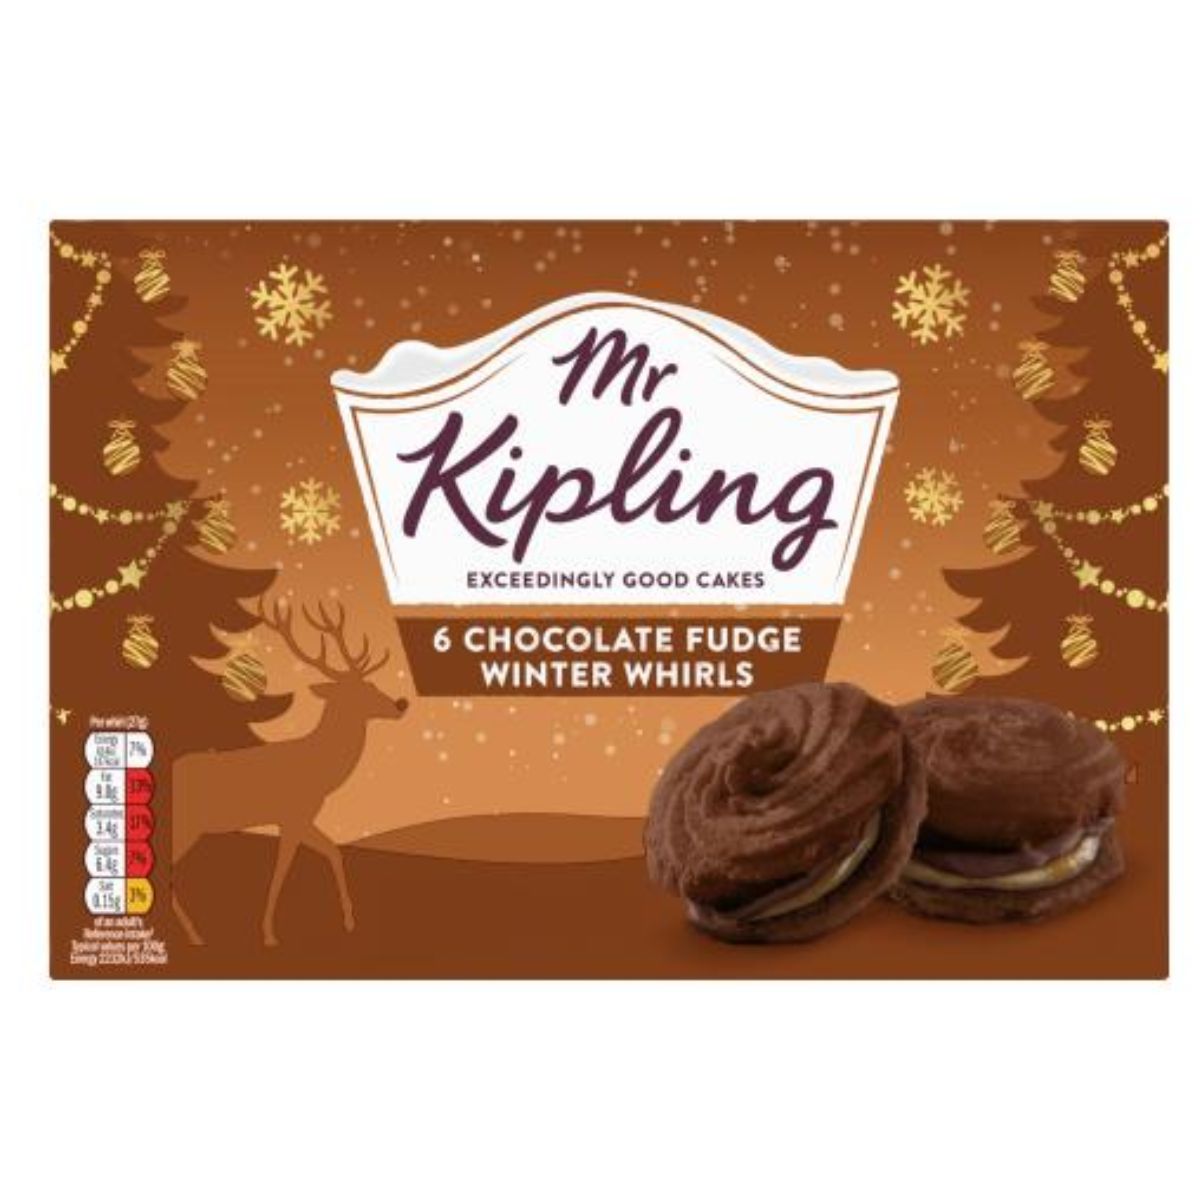 Mr Kipling's Chocolate Fudge Winter Whirls - 6pcs.